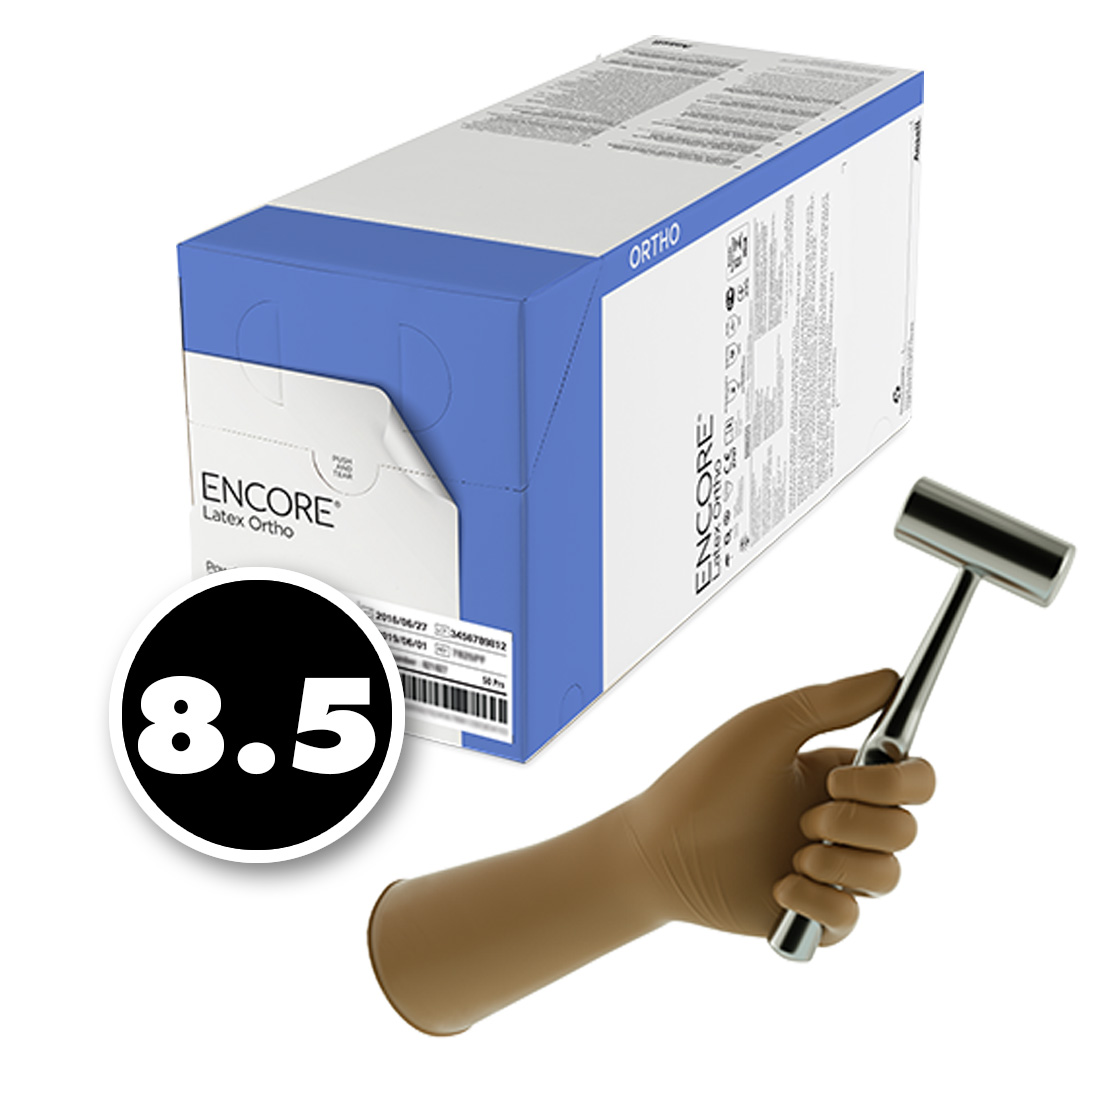 Encore® Orthopedic Surgeon Glove Size 8.5 Latex - 50PR/Box